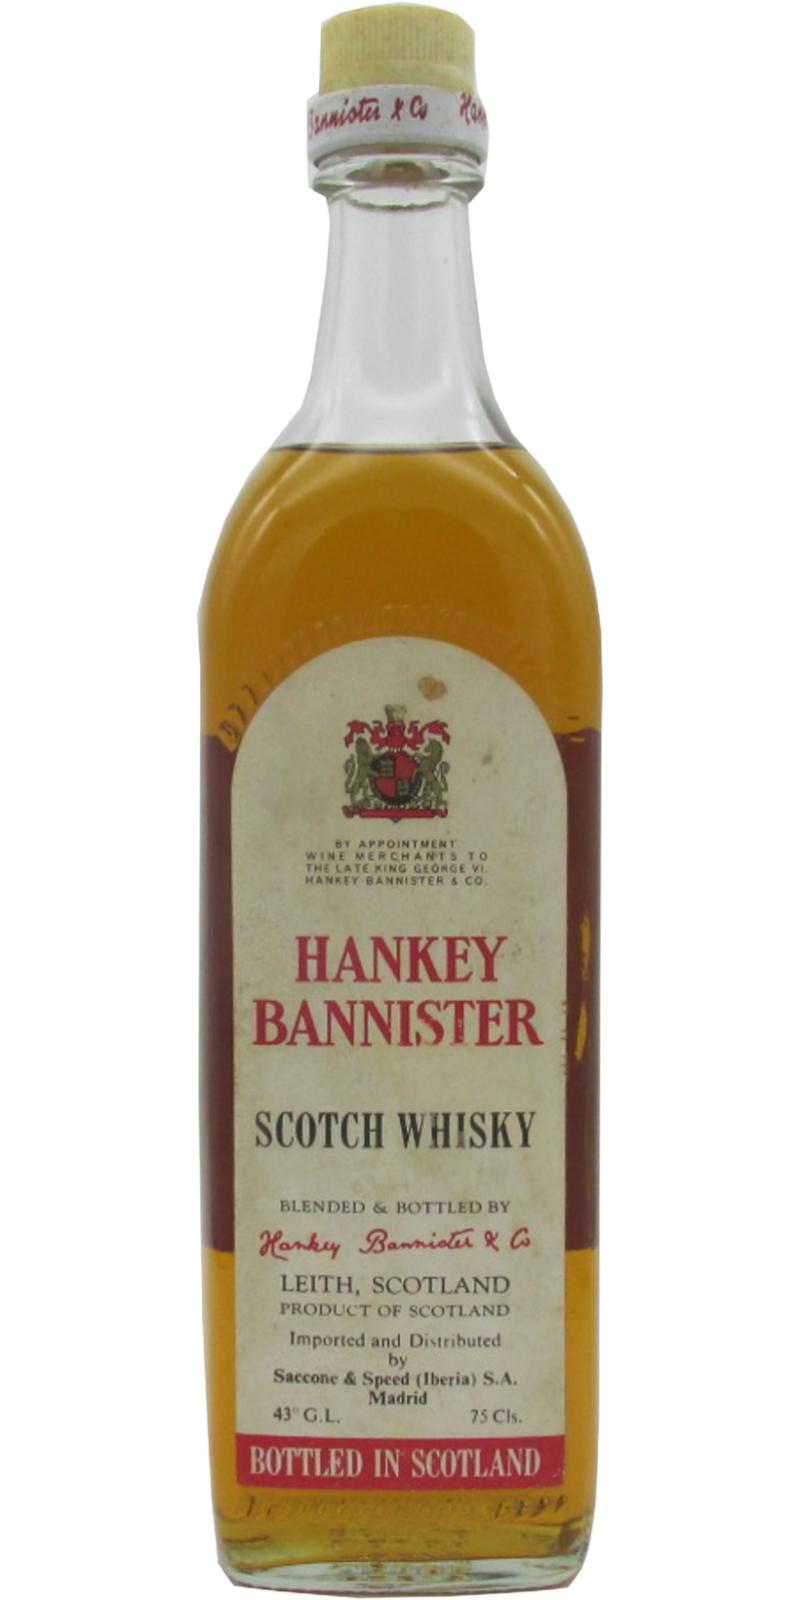 Hankey Bannister Scotch Whisky Scotch Whisky Saccone & Speed Iberia S.A. Madrid 43% 750ml